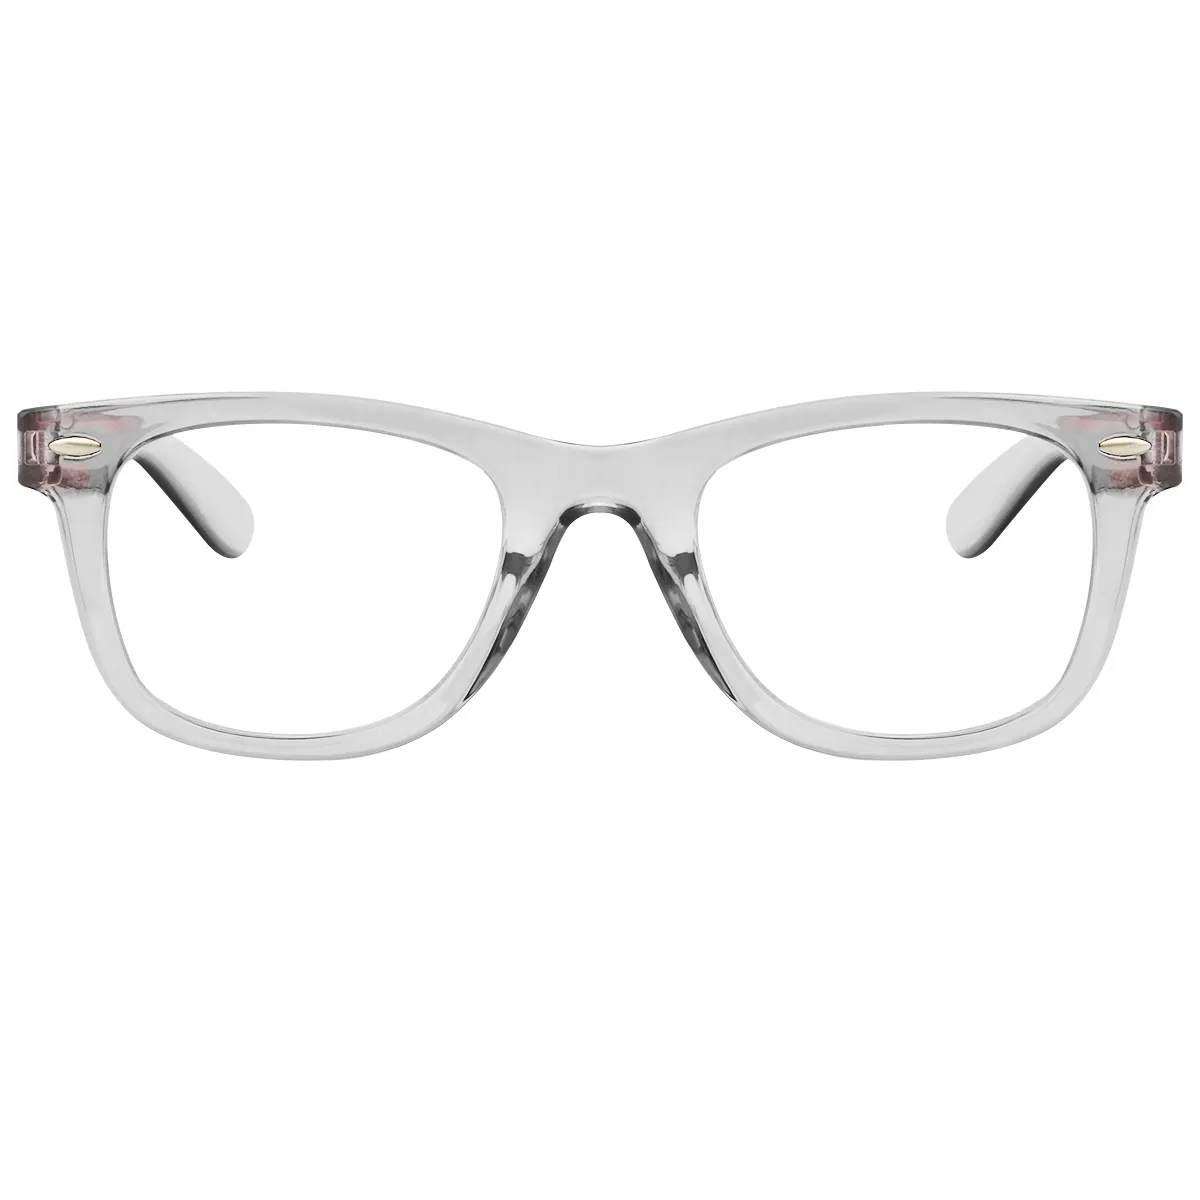 Boho - Square Transparent-Red Reading glasses for Women